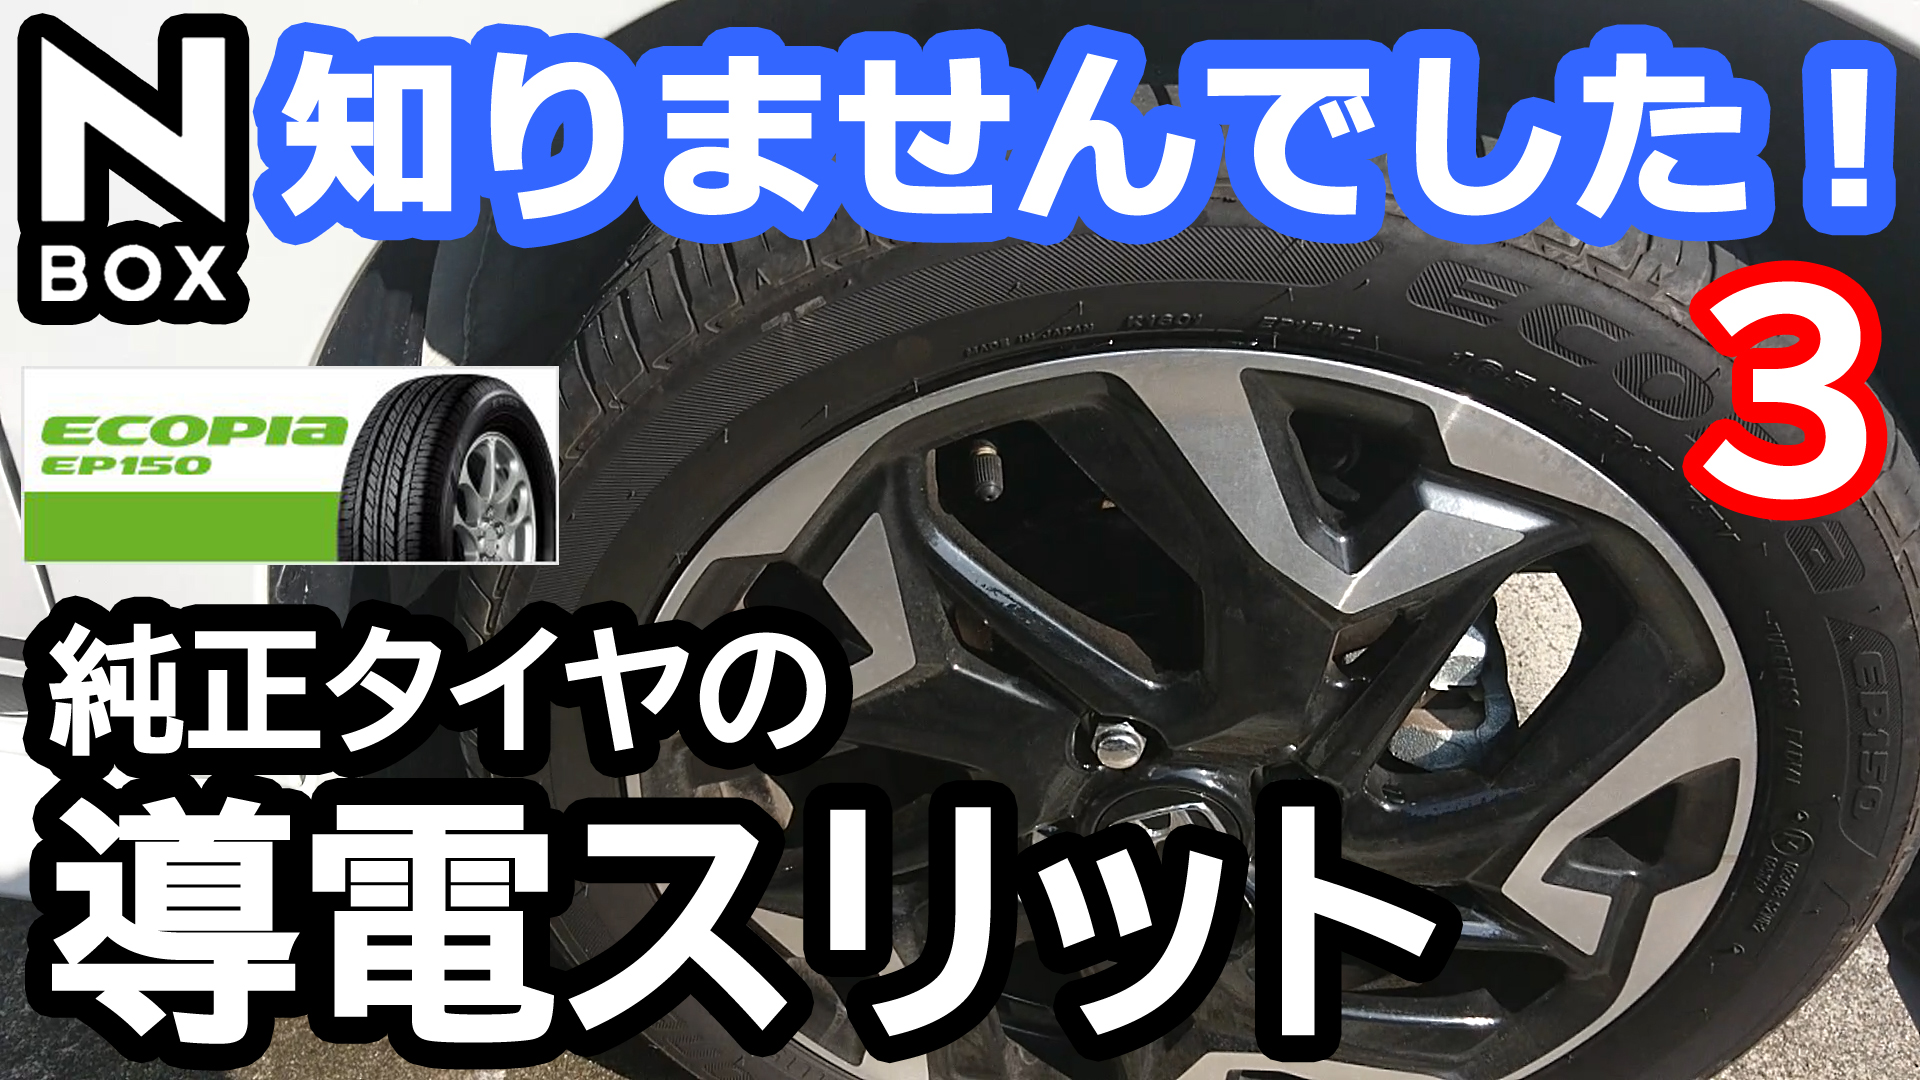 Honda N Box エコピアが純正タイヤの方なら常識ですか Momotaro Blog